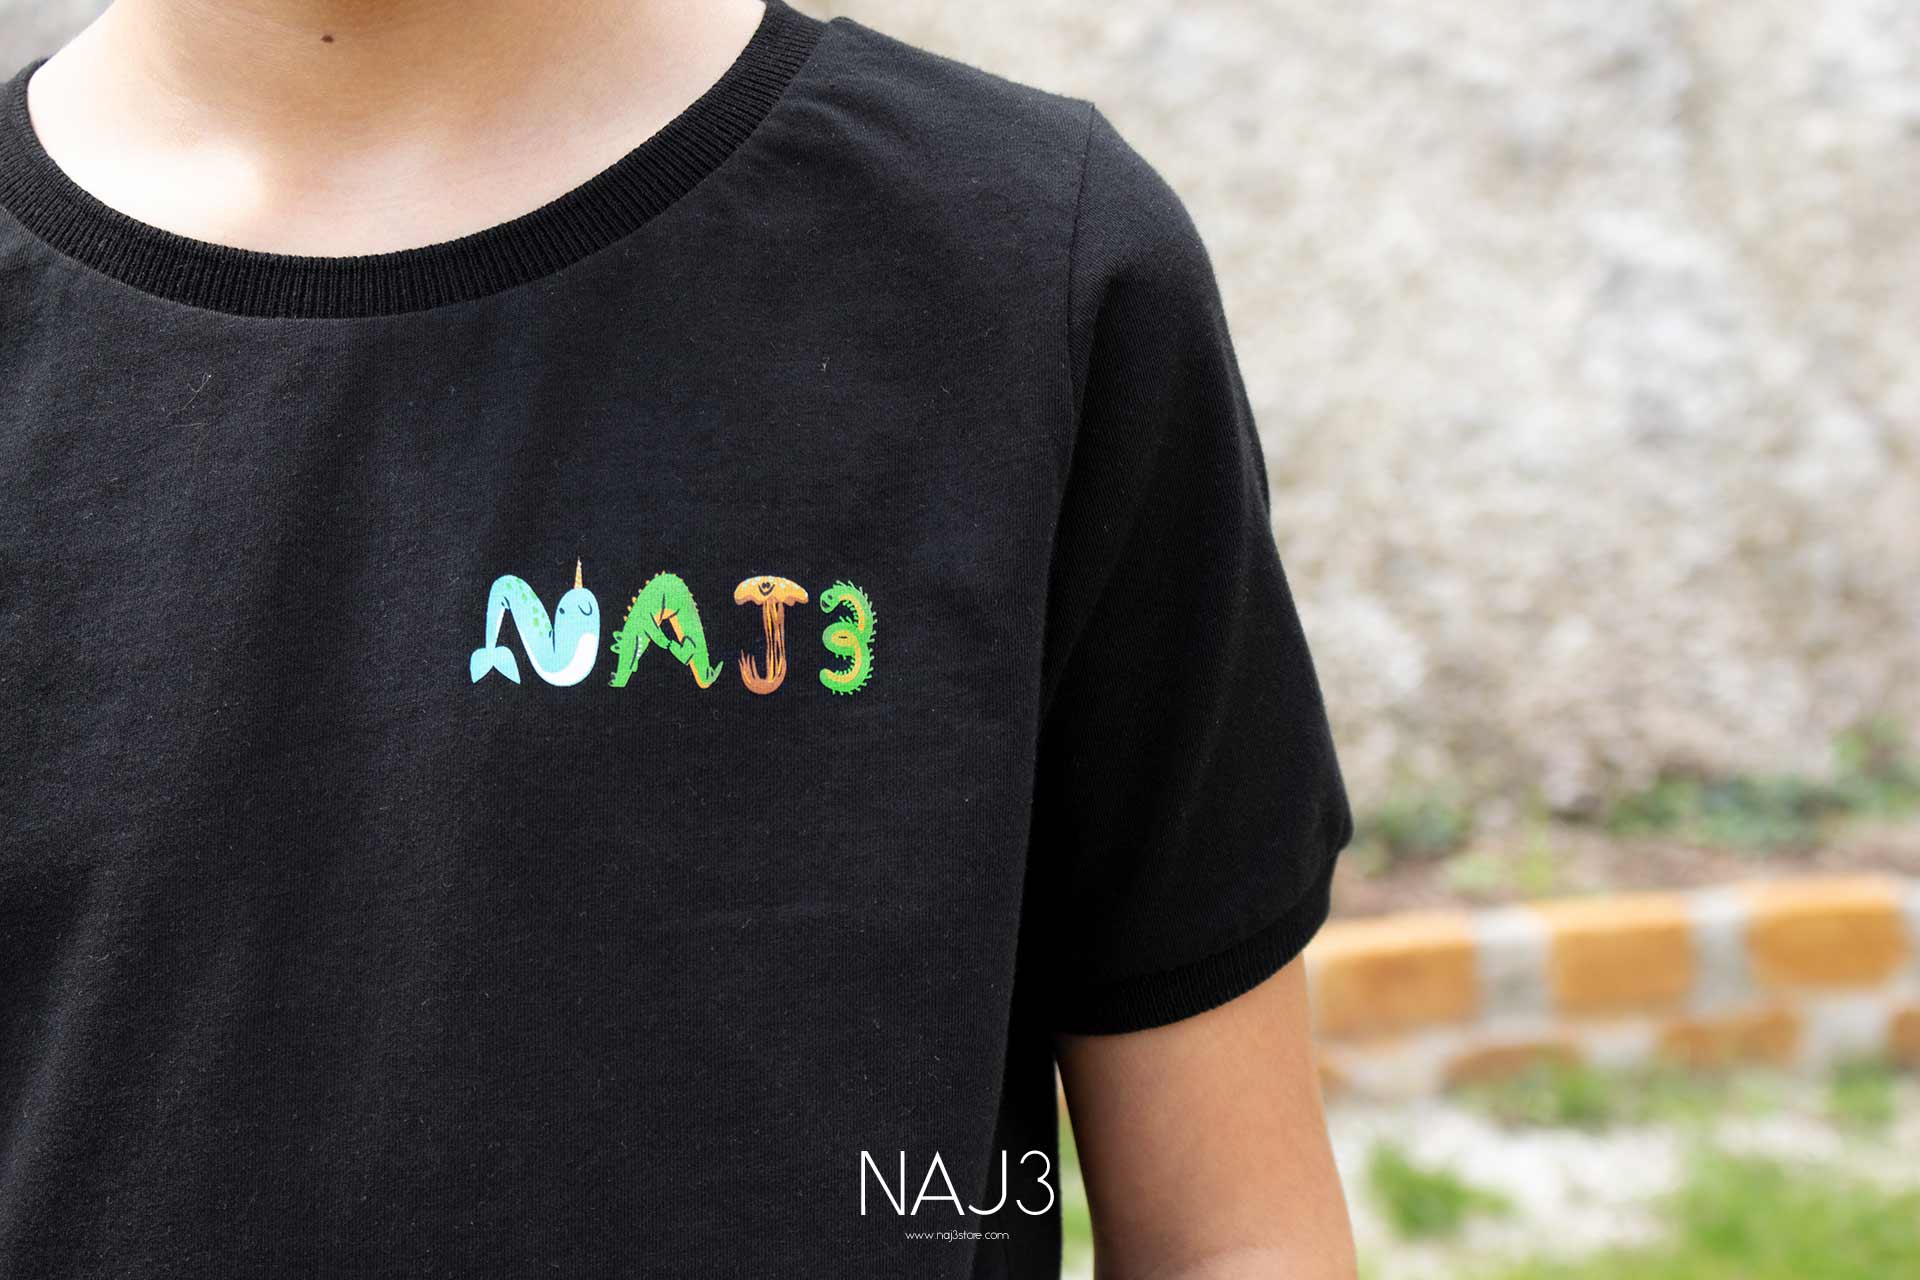 T-shirt NAJ3 Black Boy